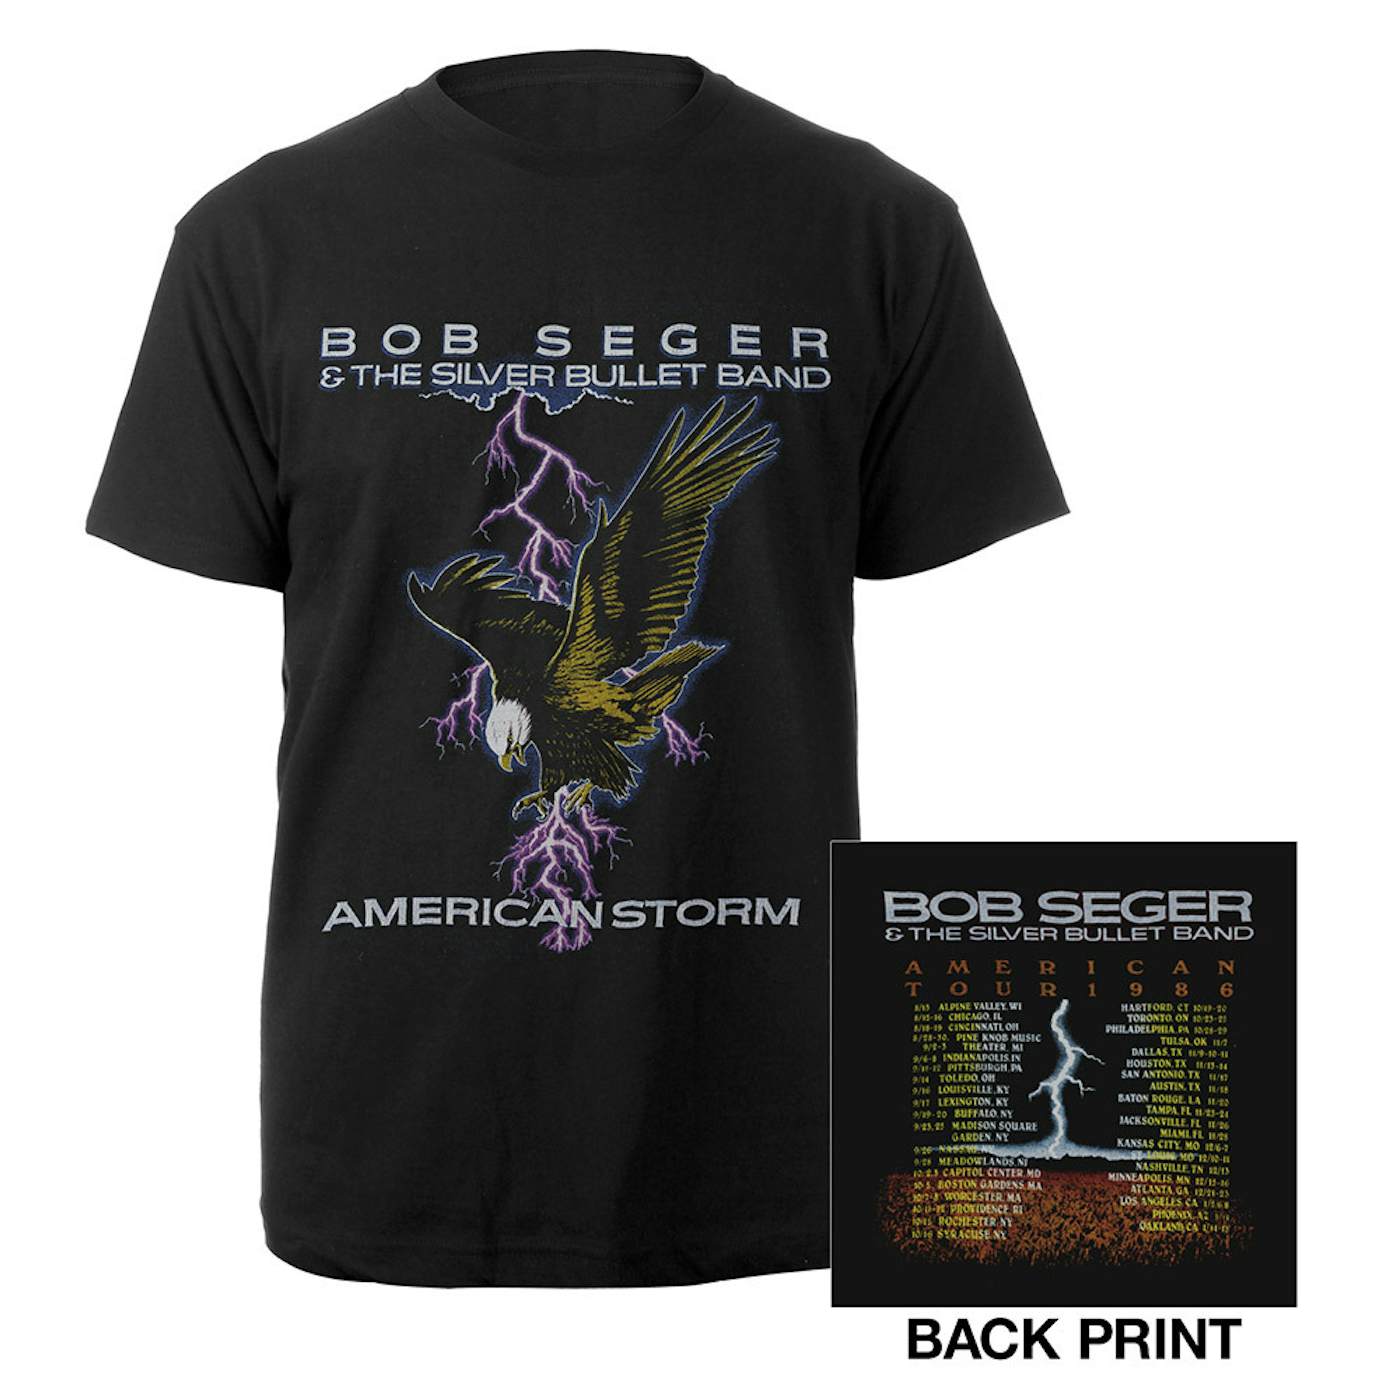 Bob Seger & The Silver Bullet Band American Storm Tour Shirt